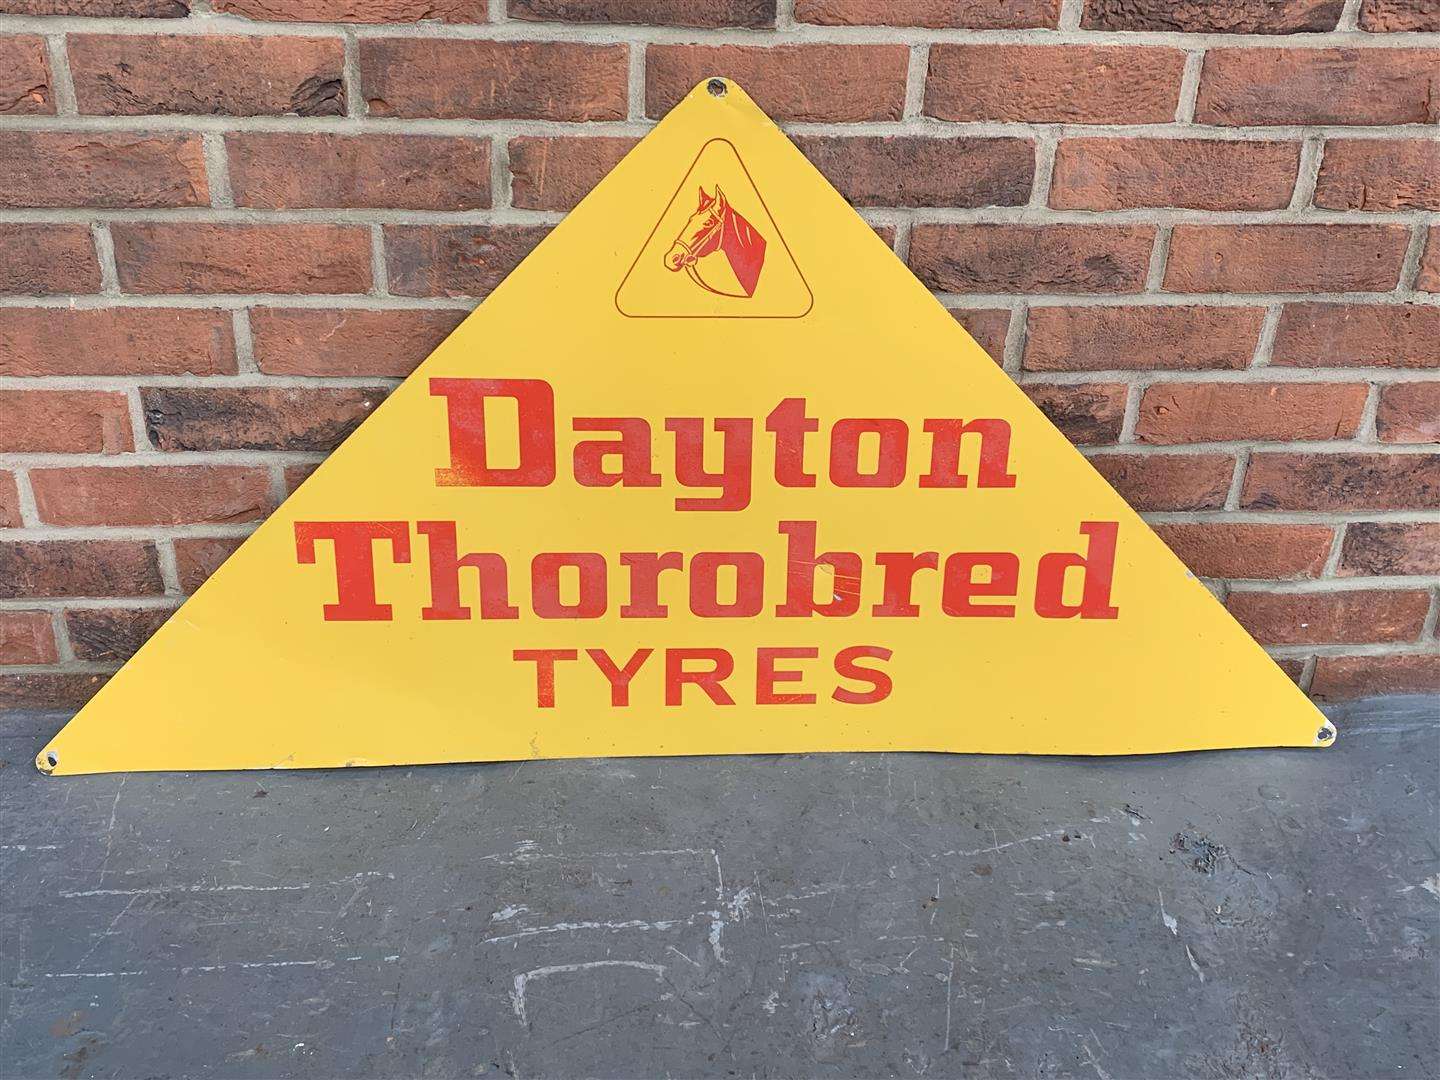 <p>Aluminium Dayton Thorobred Tyres Sign</p>